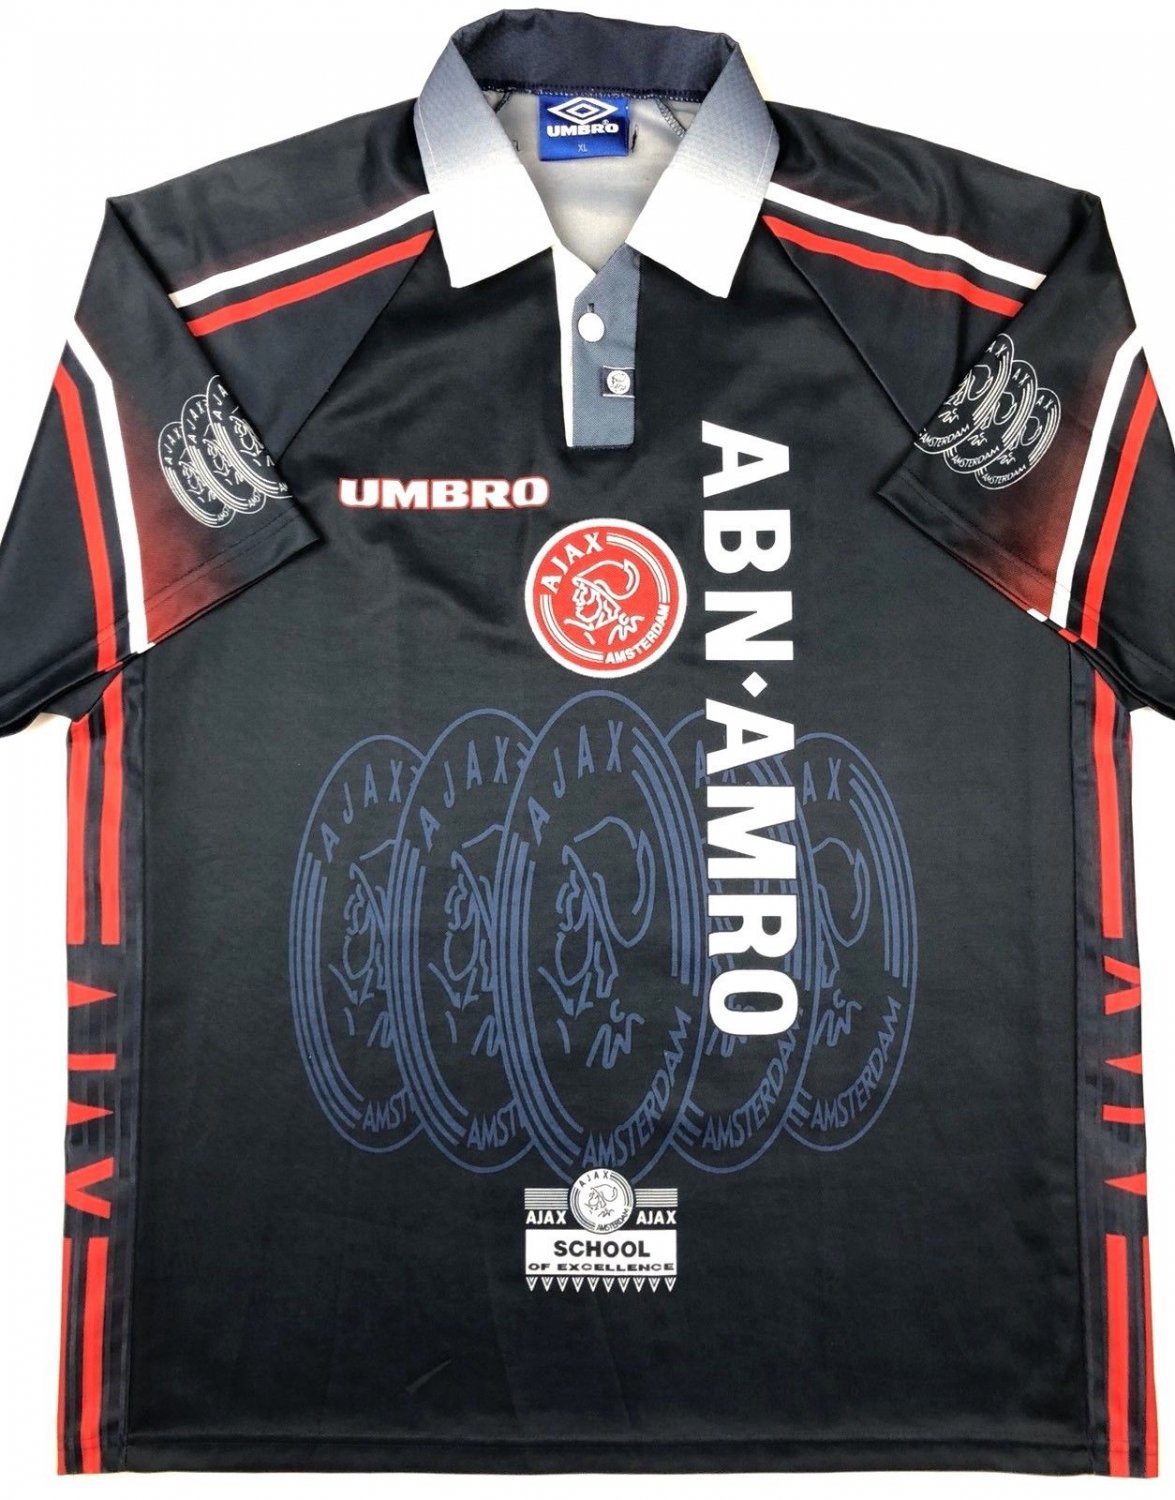 verlichten Bestrating contact Ajax Uit voetbalshirt 1997 - 1998. Sponsored by ABM Amro